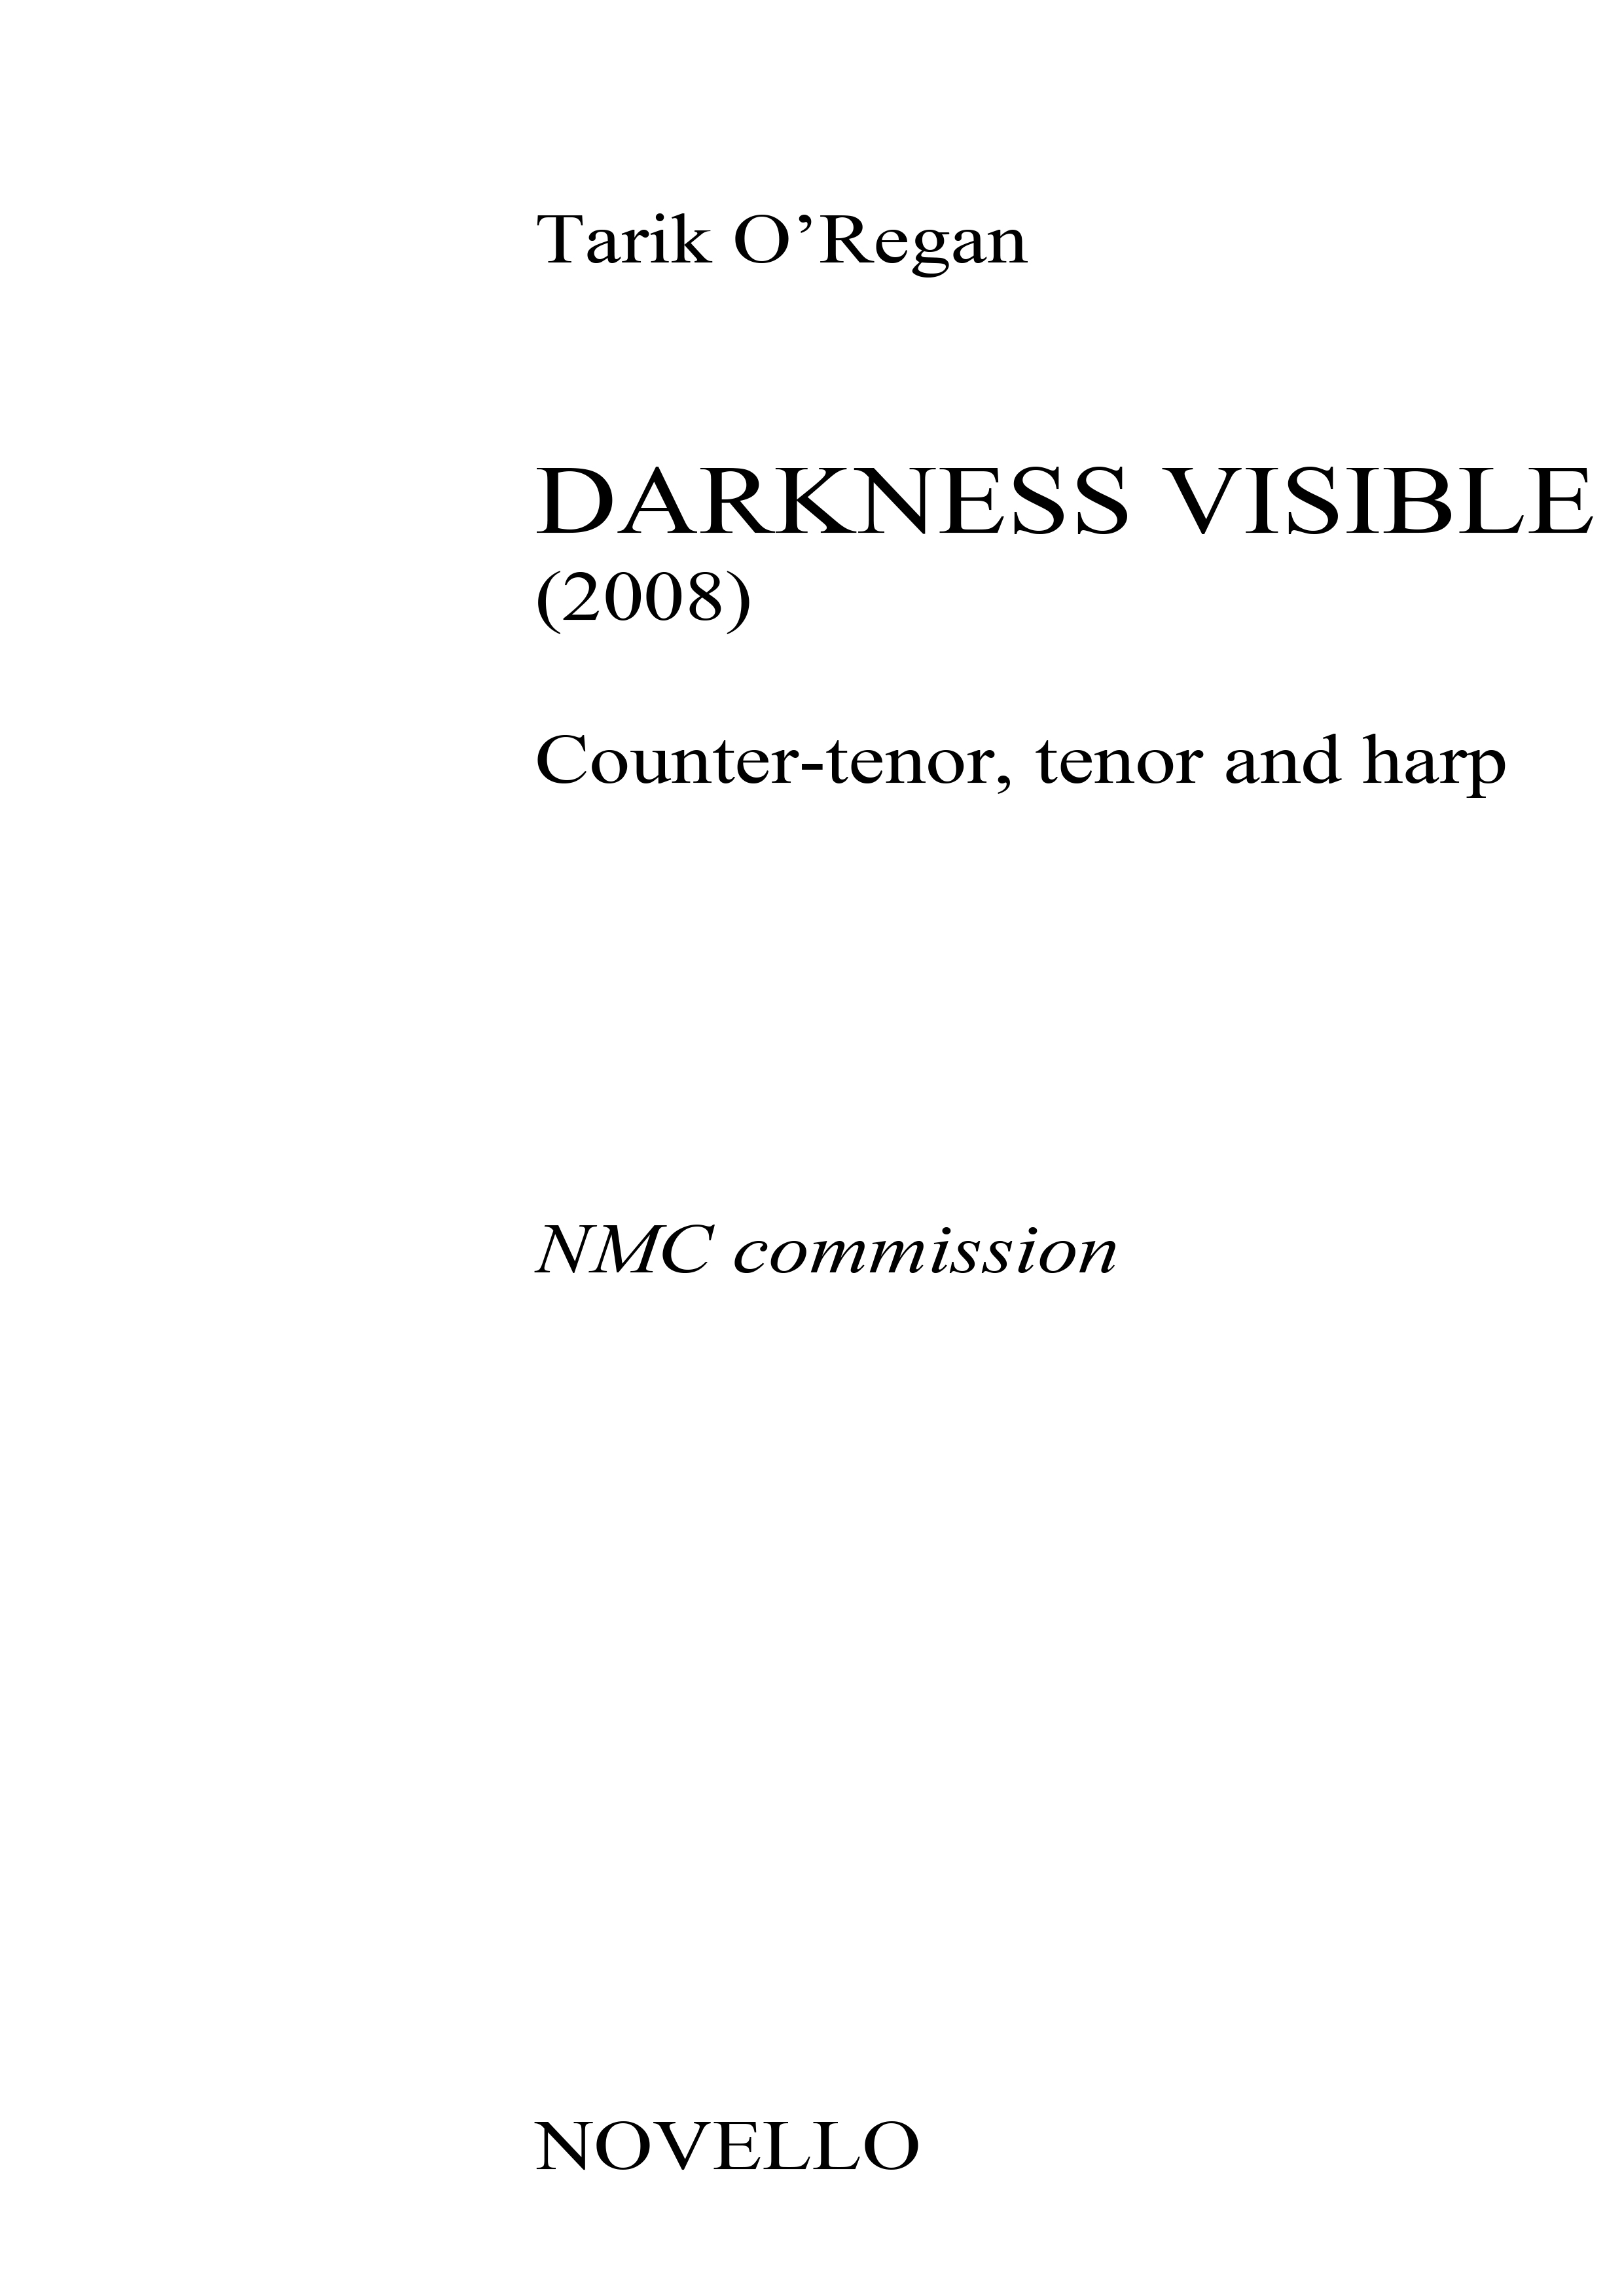 Tarik O'Regan: Darkness Visible (Counter-Tenor/Tenor/Harp): Countertenor: Vocal